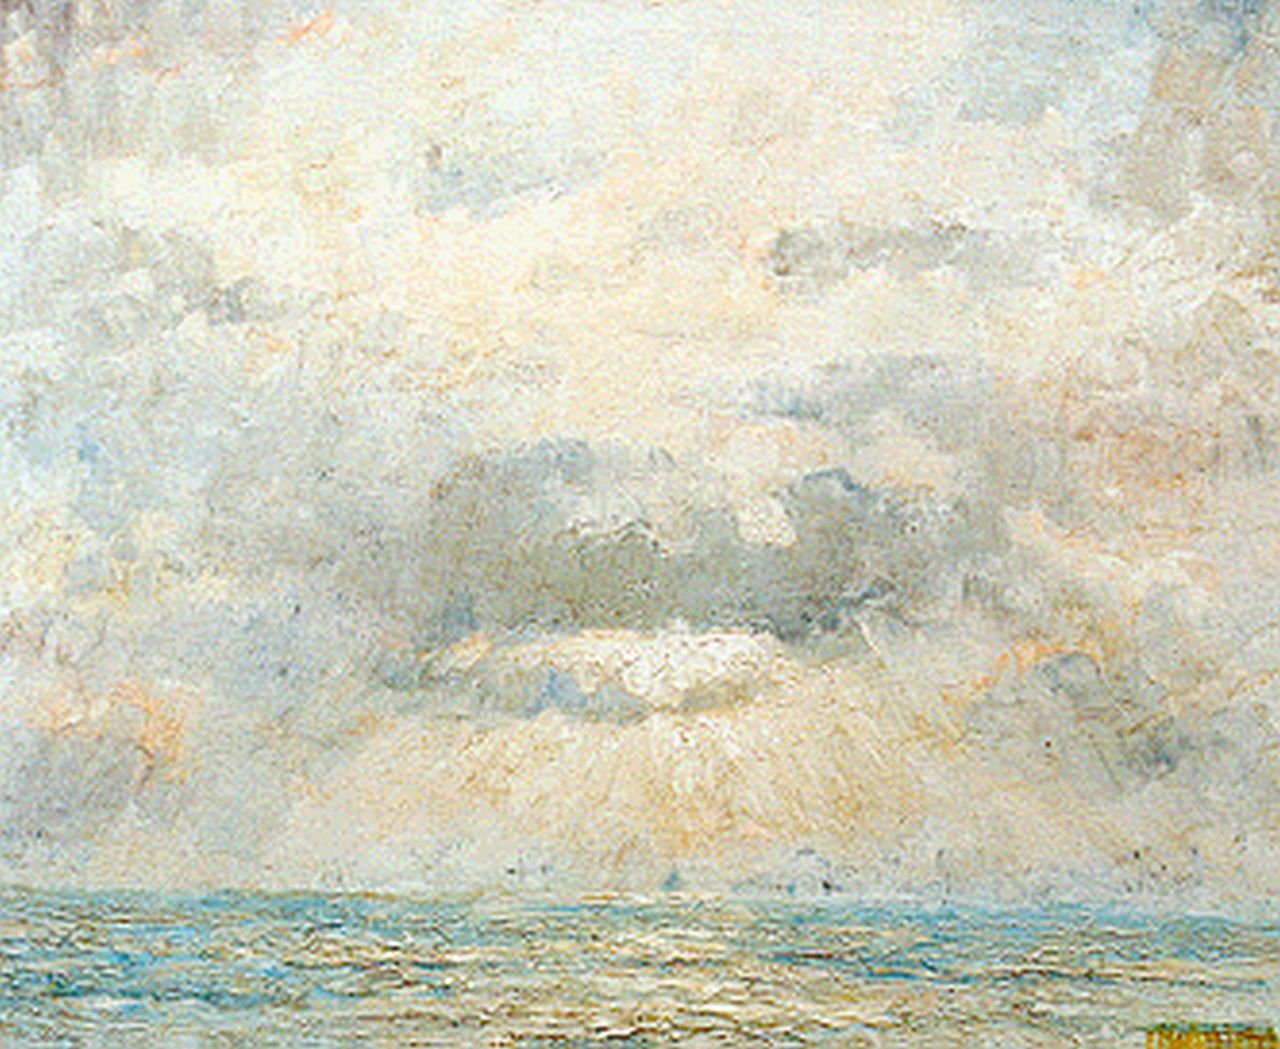 Mansvelt Beck P.E.A.  | Pieter Engelbertus Adrianus Mansvelt Beck, Evening twilight, oil on canvas 70.4 x 84.5 cm, signed l.r.